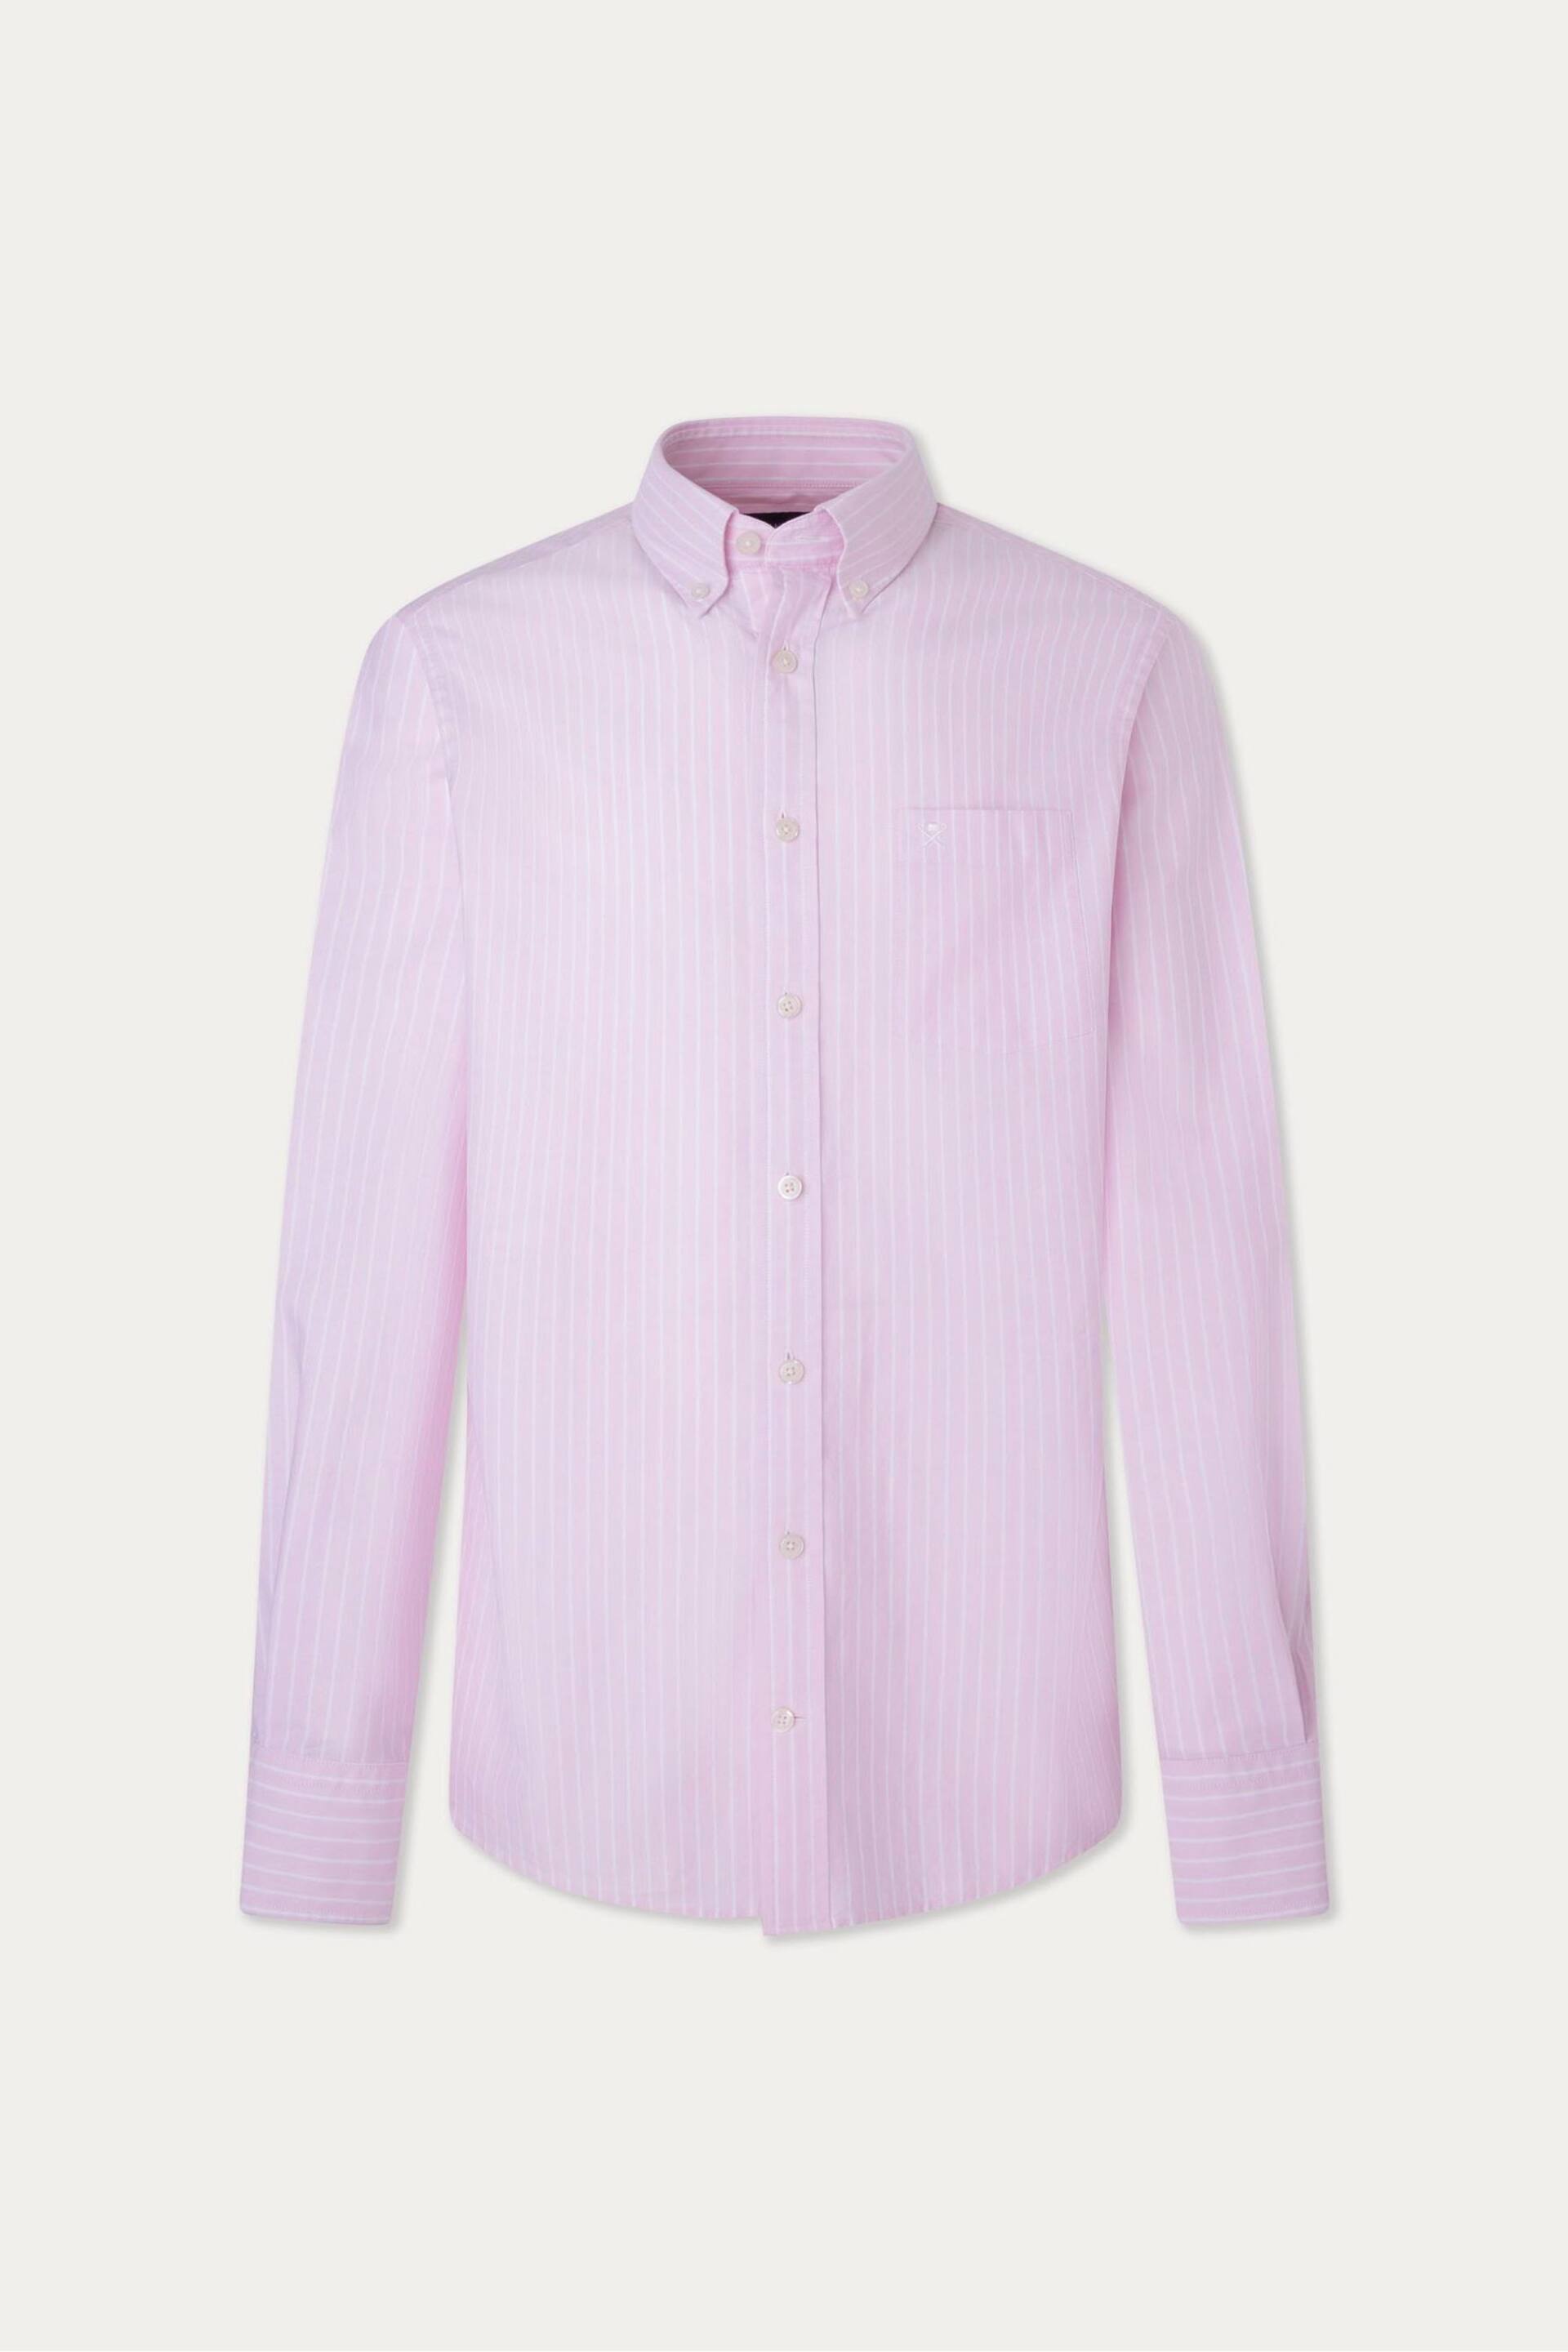 Hackett London Men Pink Long Sleeve Shirt - Image 1 of 3